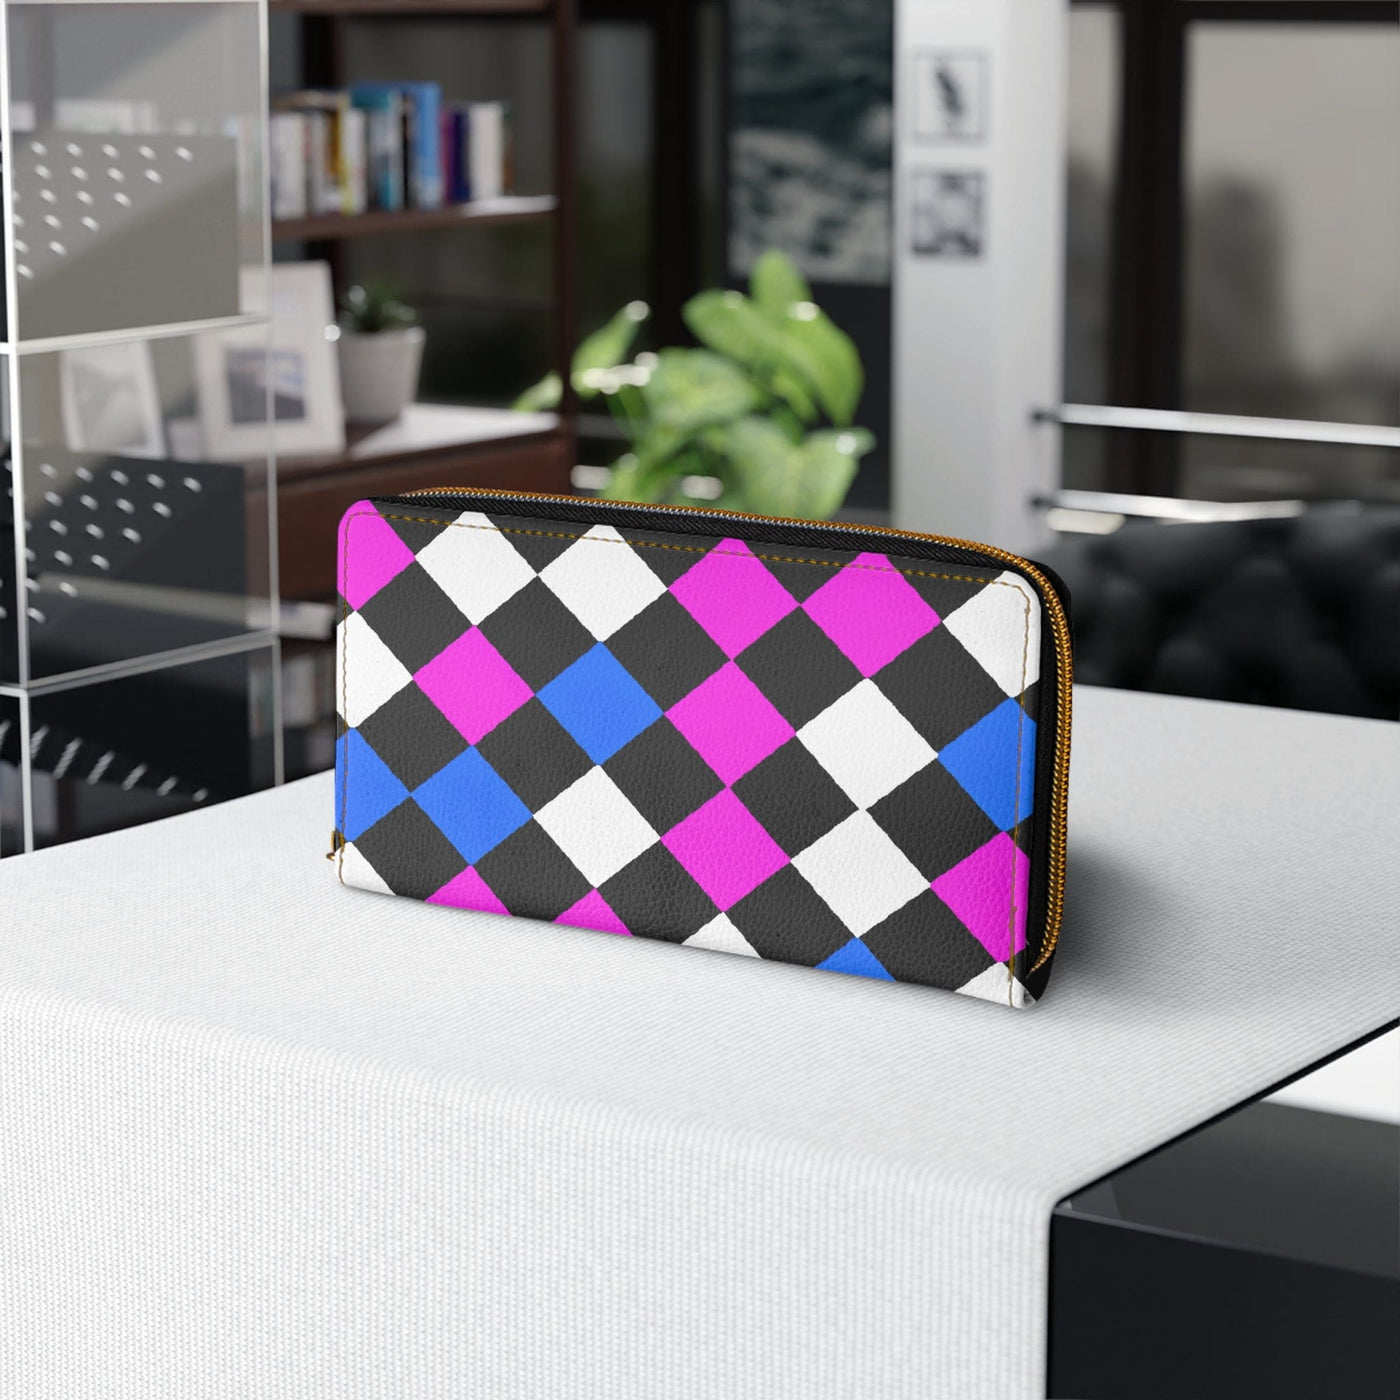 Black Pink Blue Checkered Illustration Womens Zipper Wallet Clutch Purse - Bags